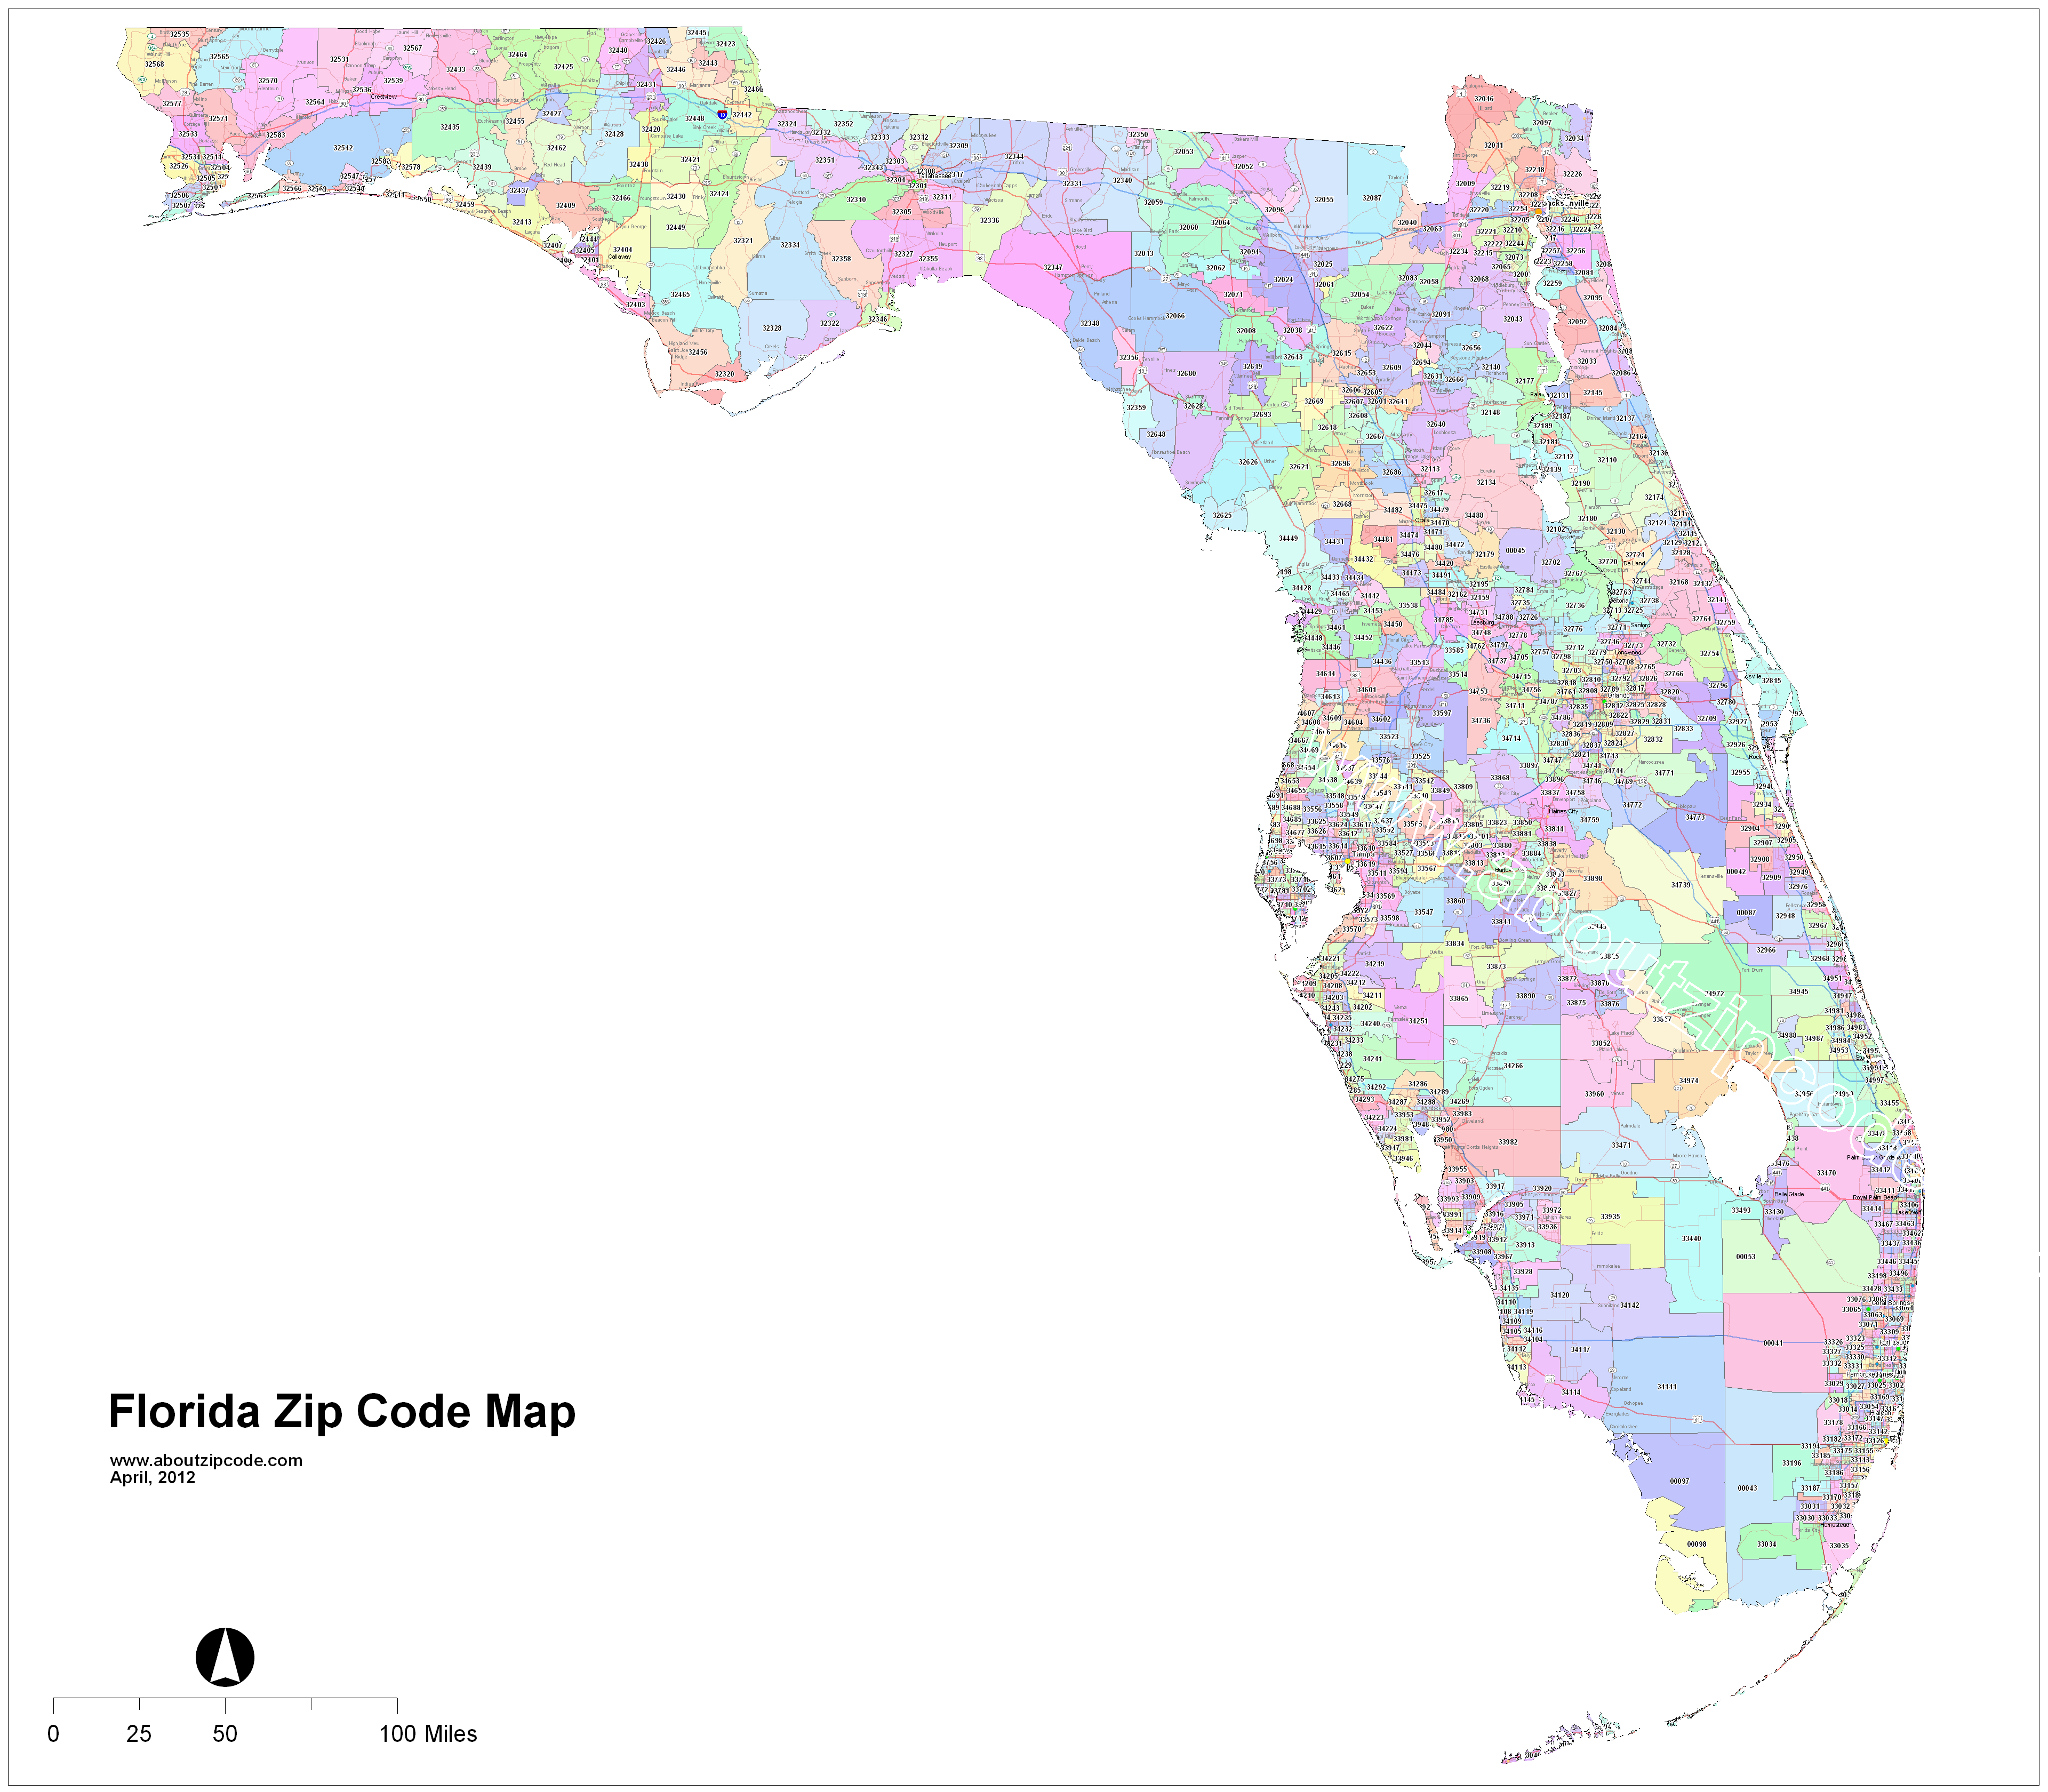 jupiter fl zip code map Florida Zip Code Maps Free Florida Zip Code Maps jupiter fl zip code map